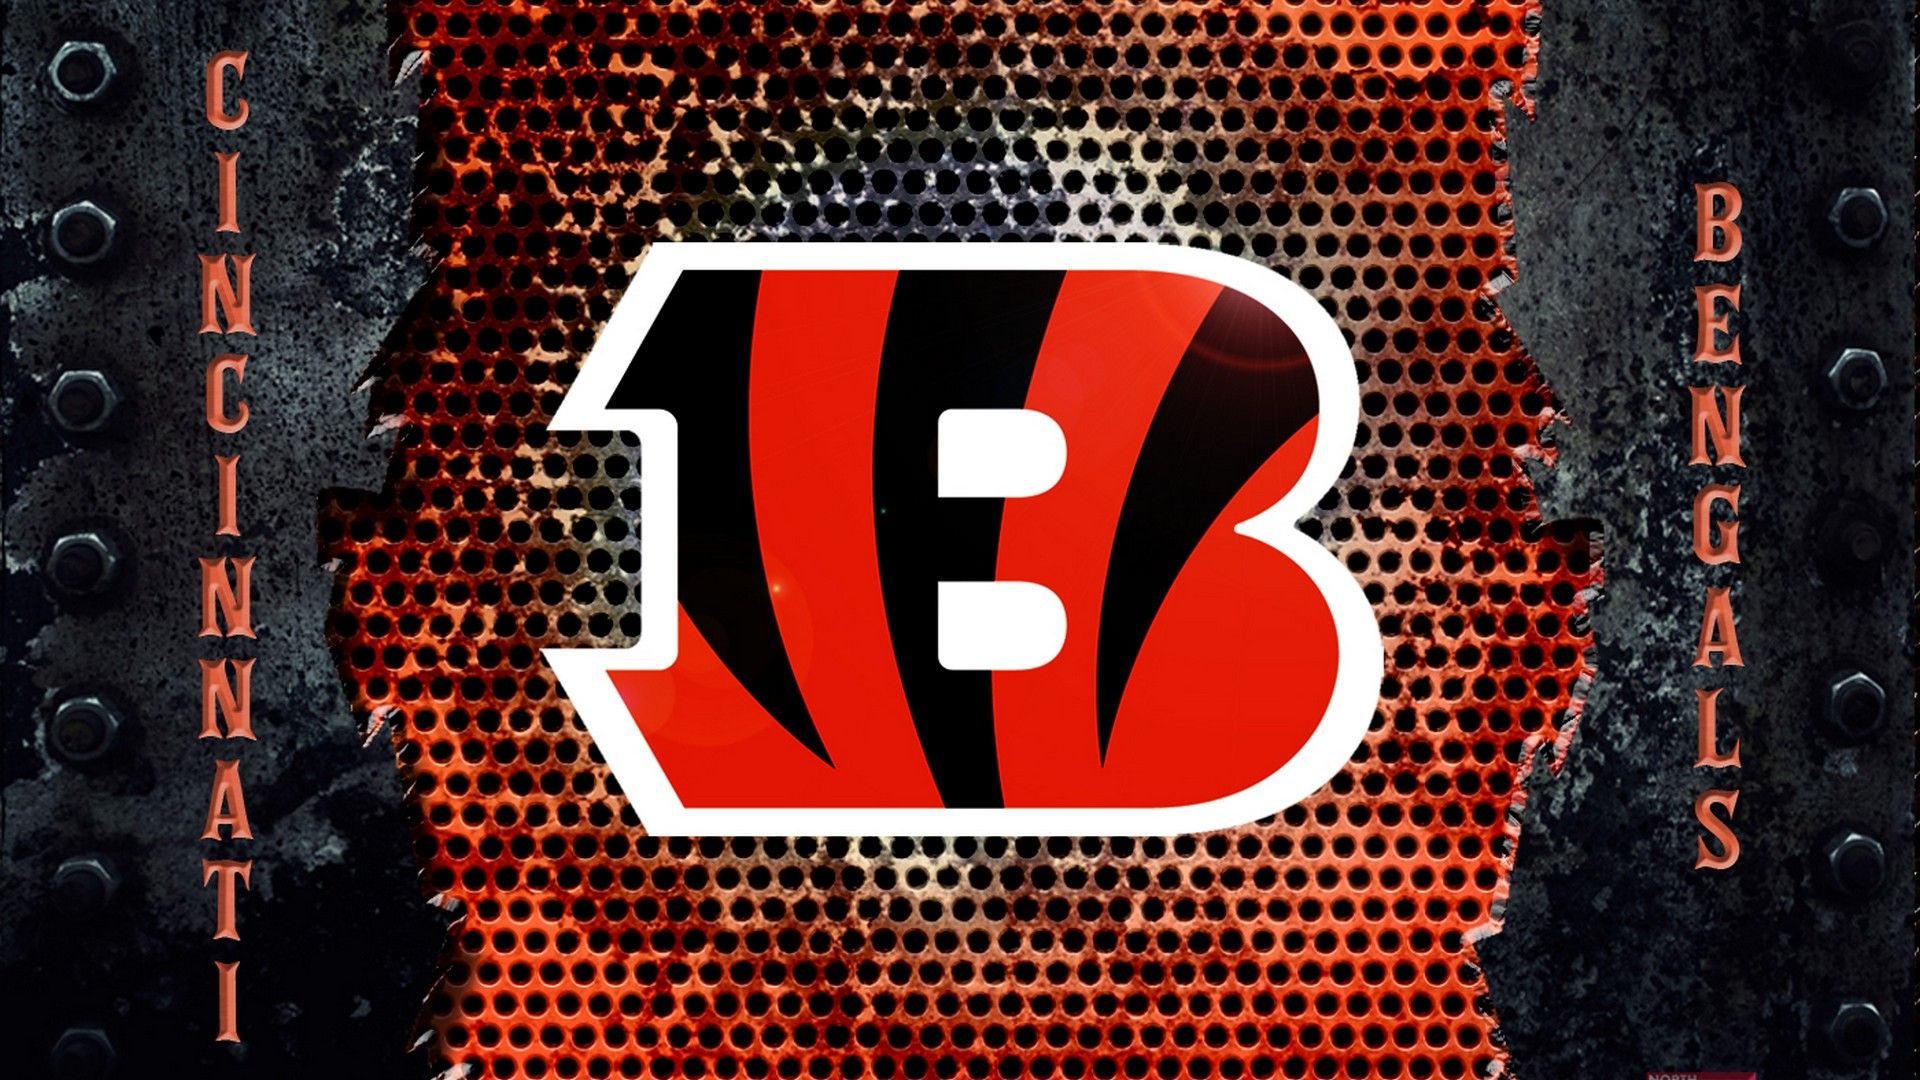 Cincinnati Bengals Wallpaper HD   2021 NFL Football Wallpapers